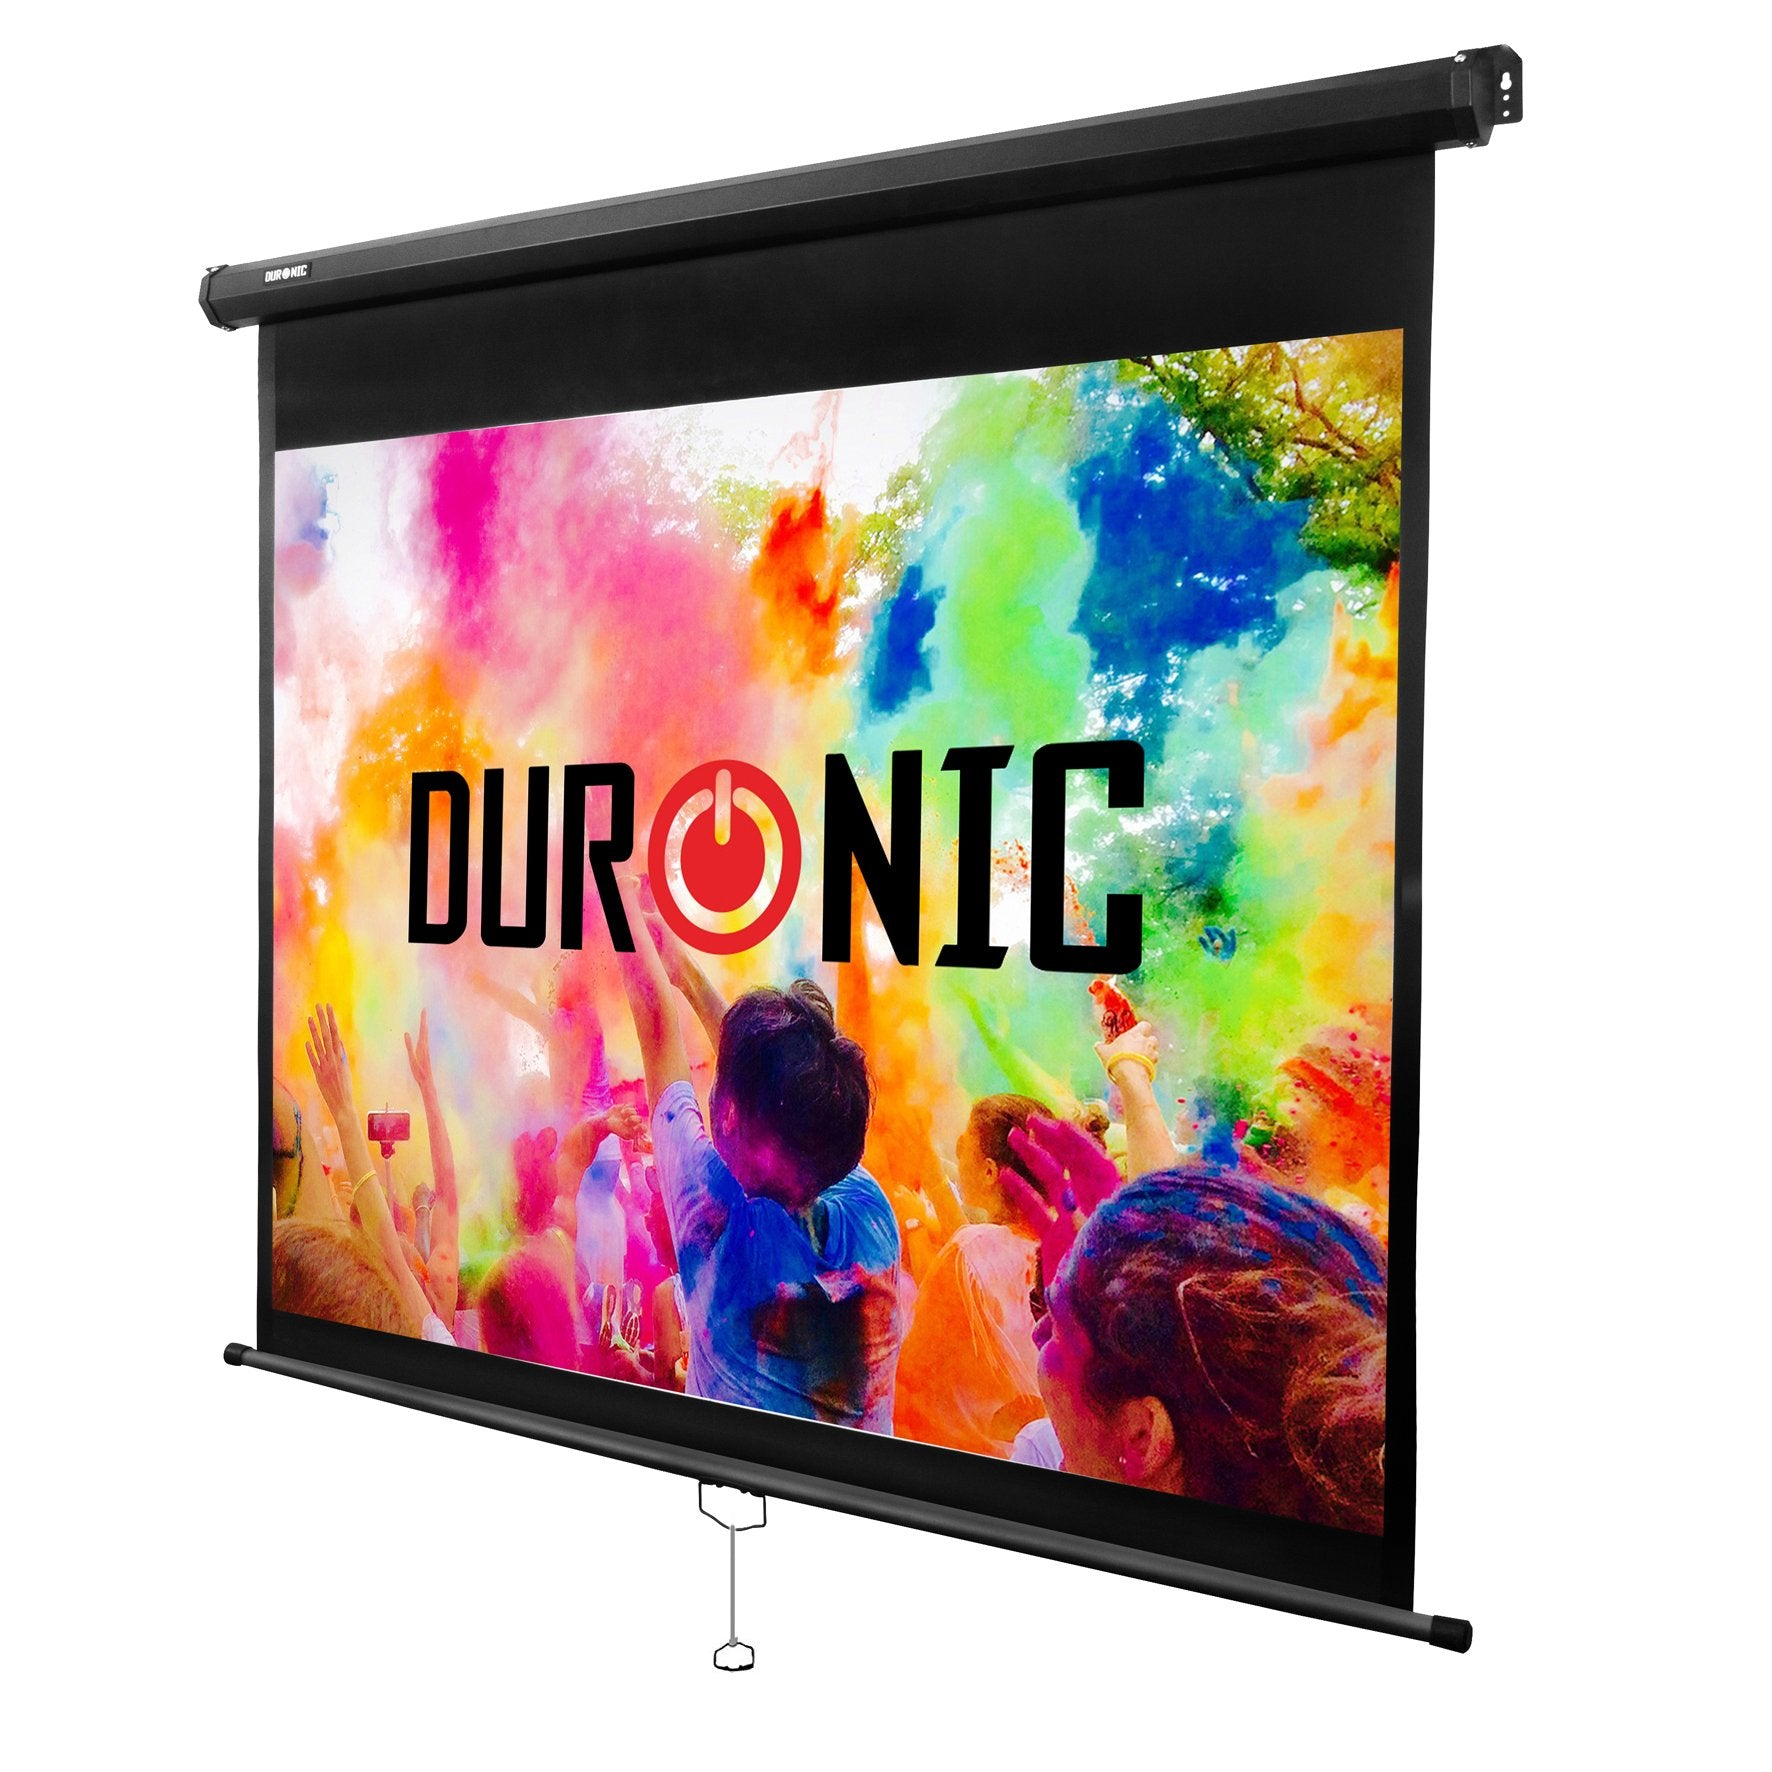 Duronic Mps60 43 pantalla de manual 122x91 60 enrollable proyector